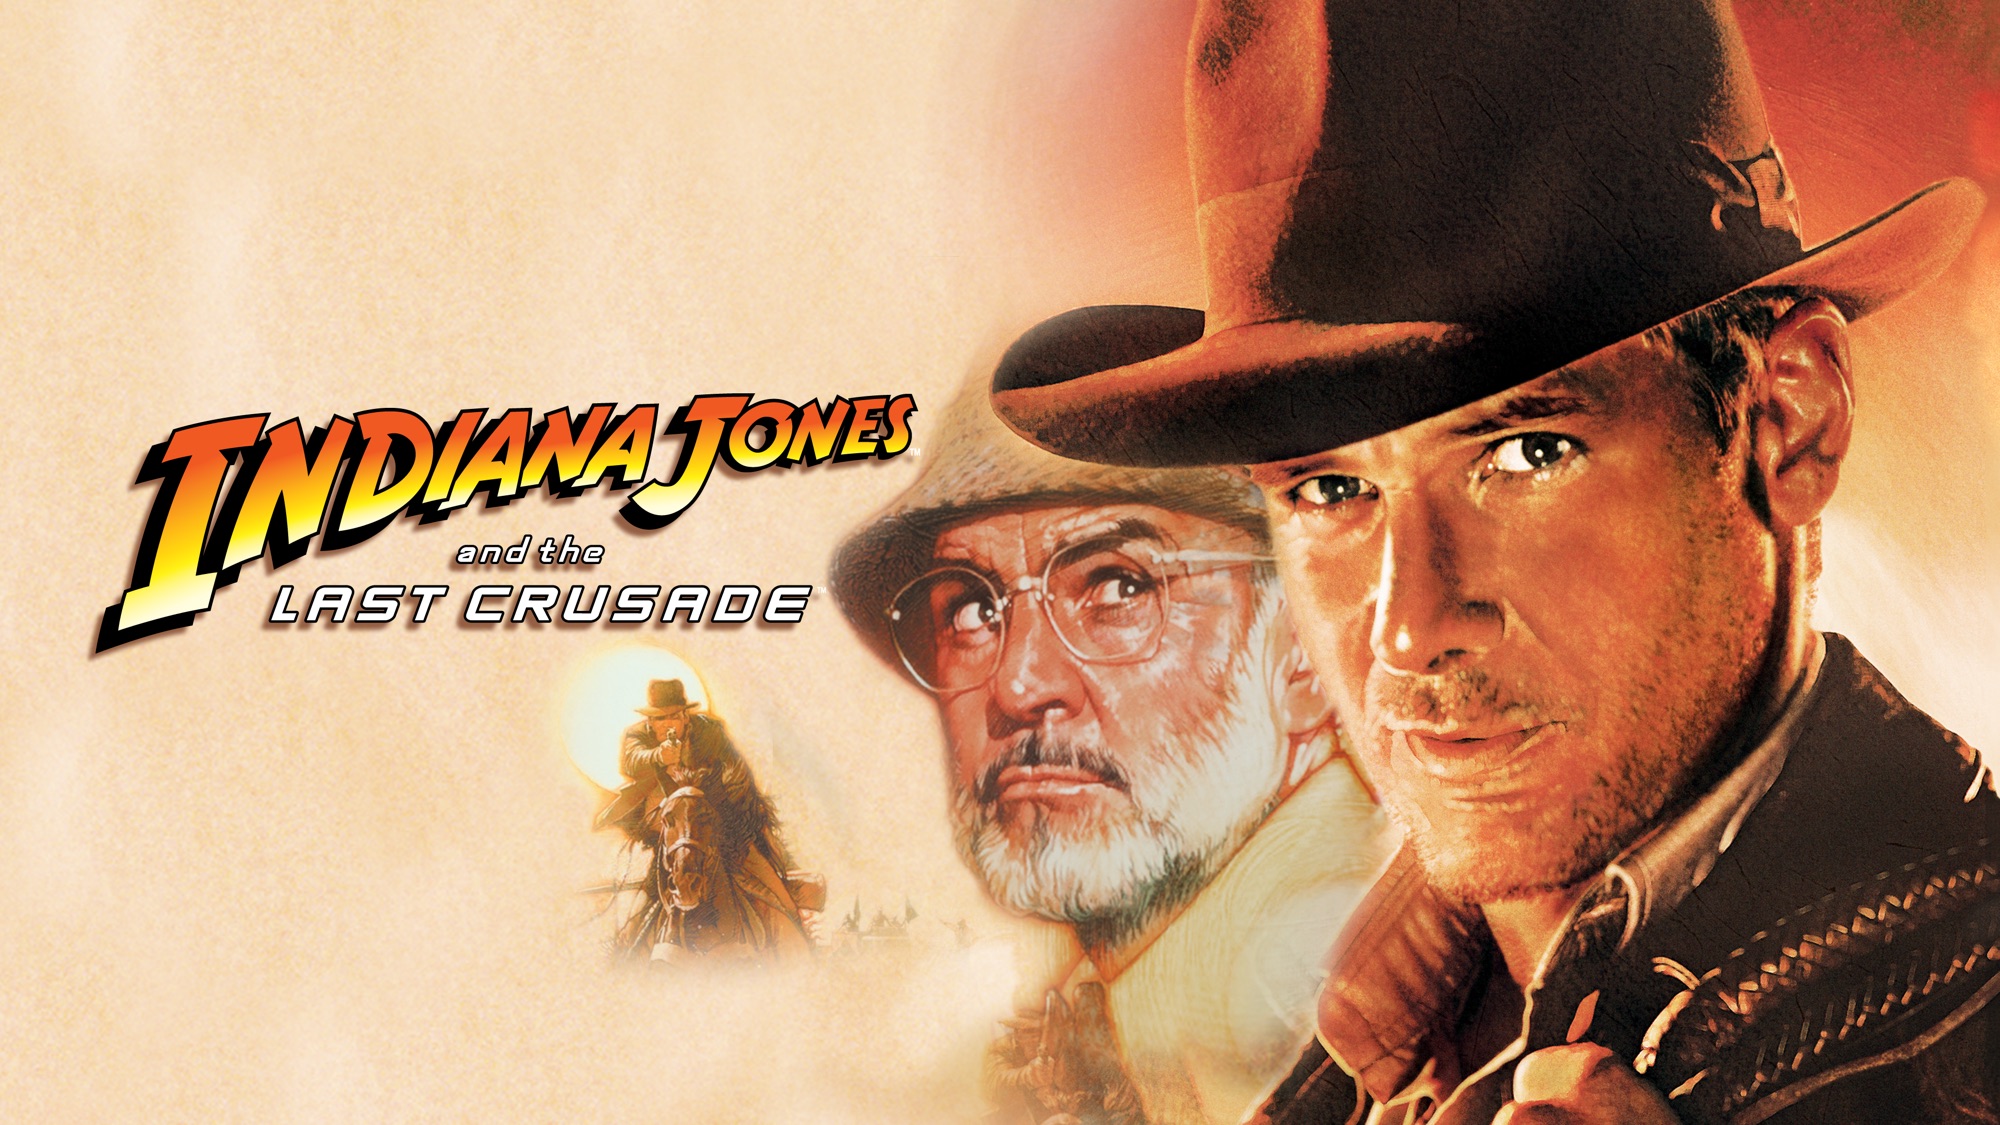 Indiana Jones HD Wallpaper and Background